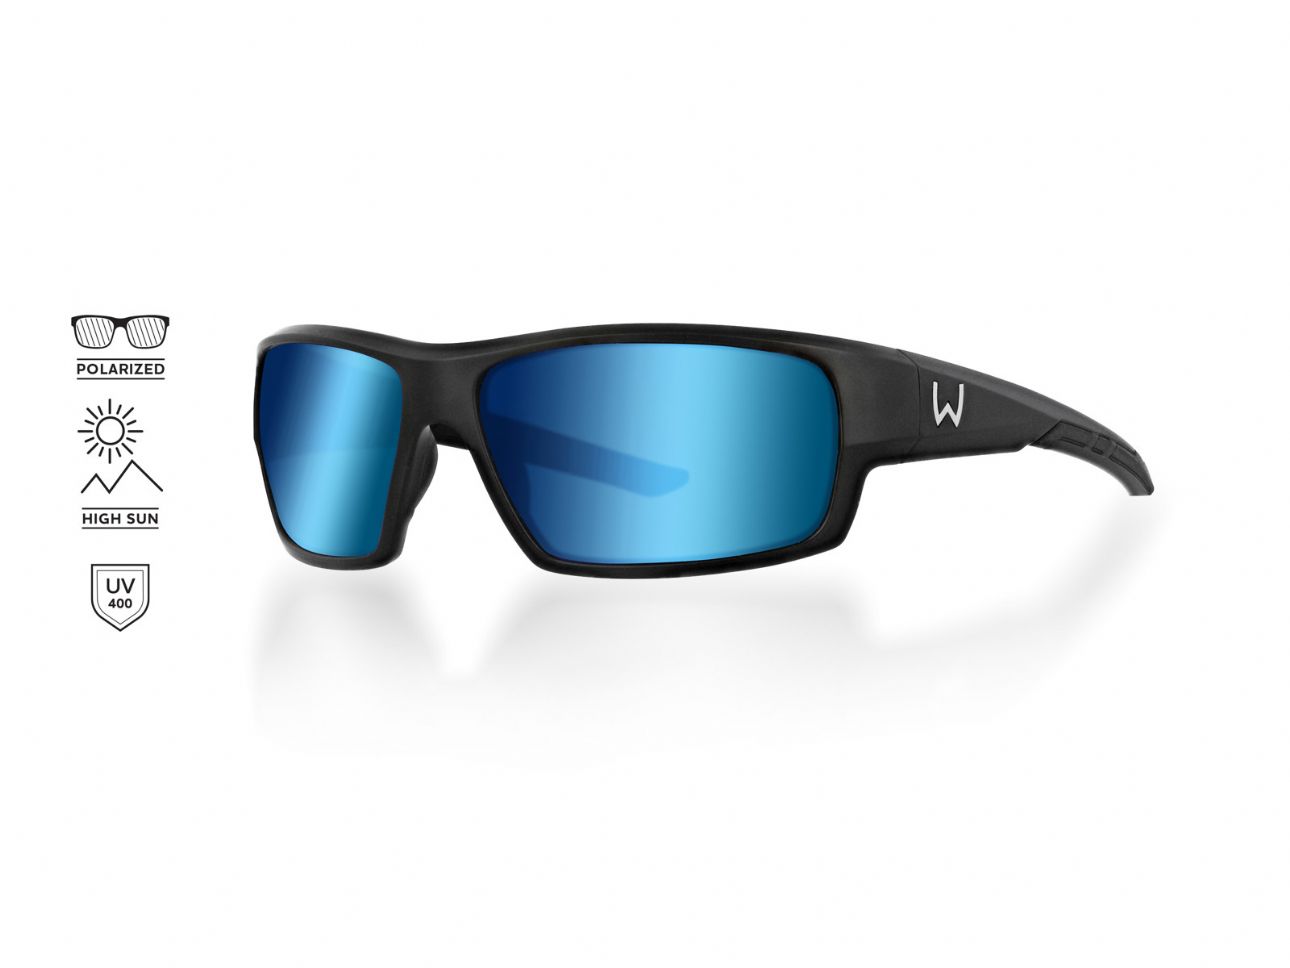 Westin W6 Sport Sunglasses from